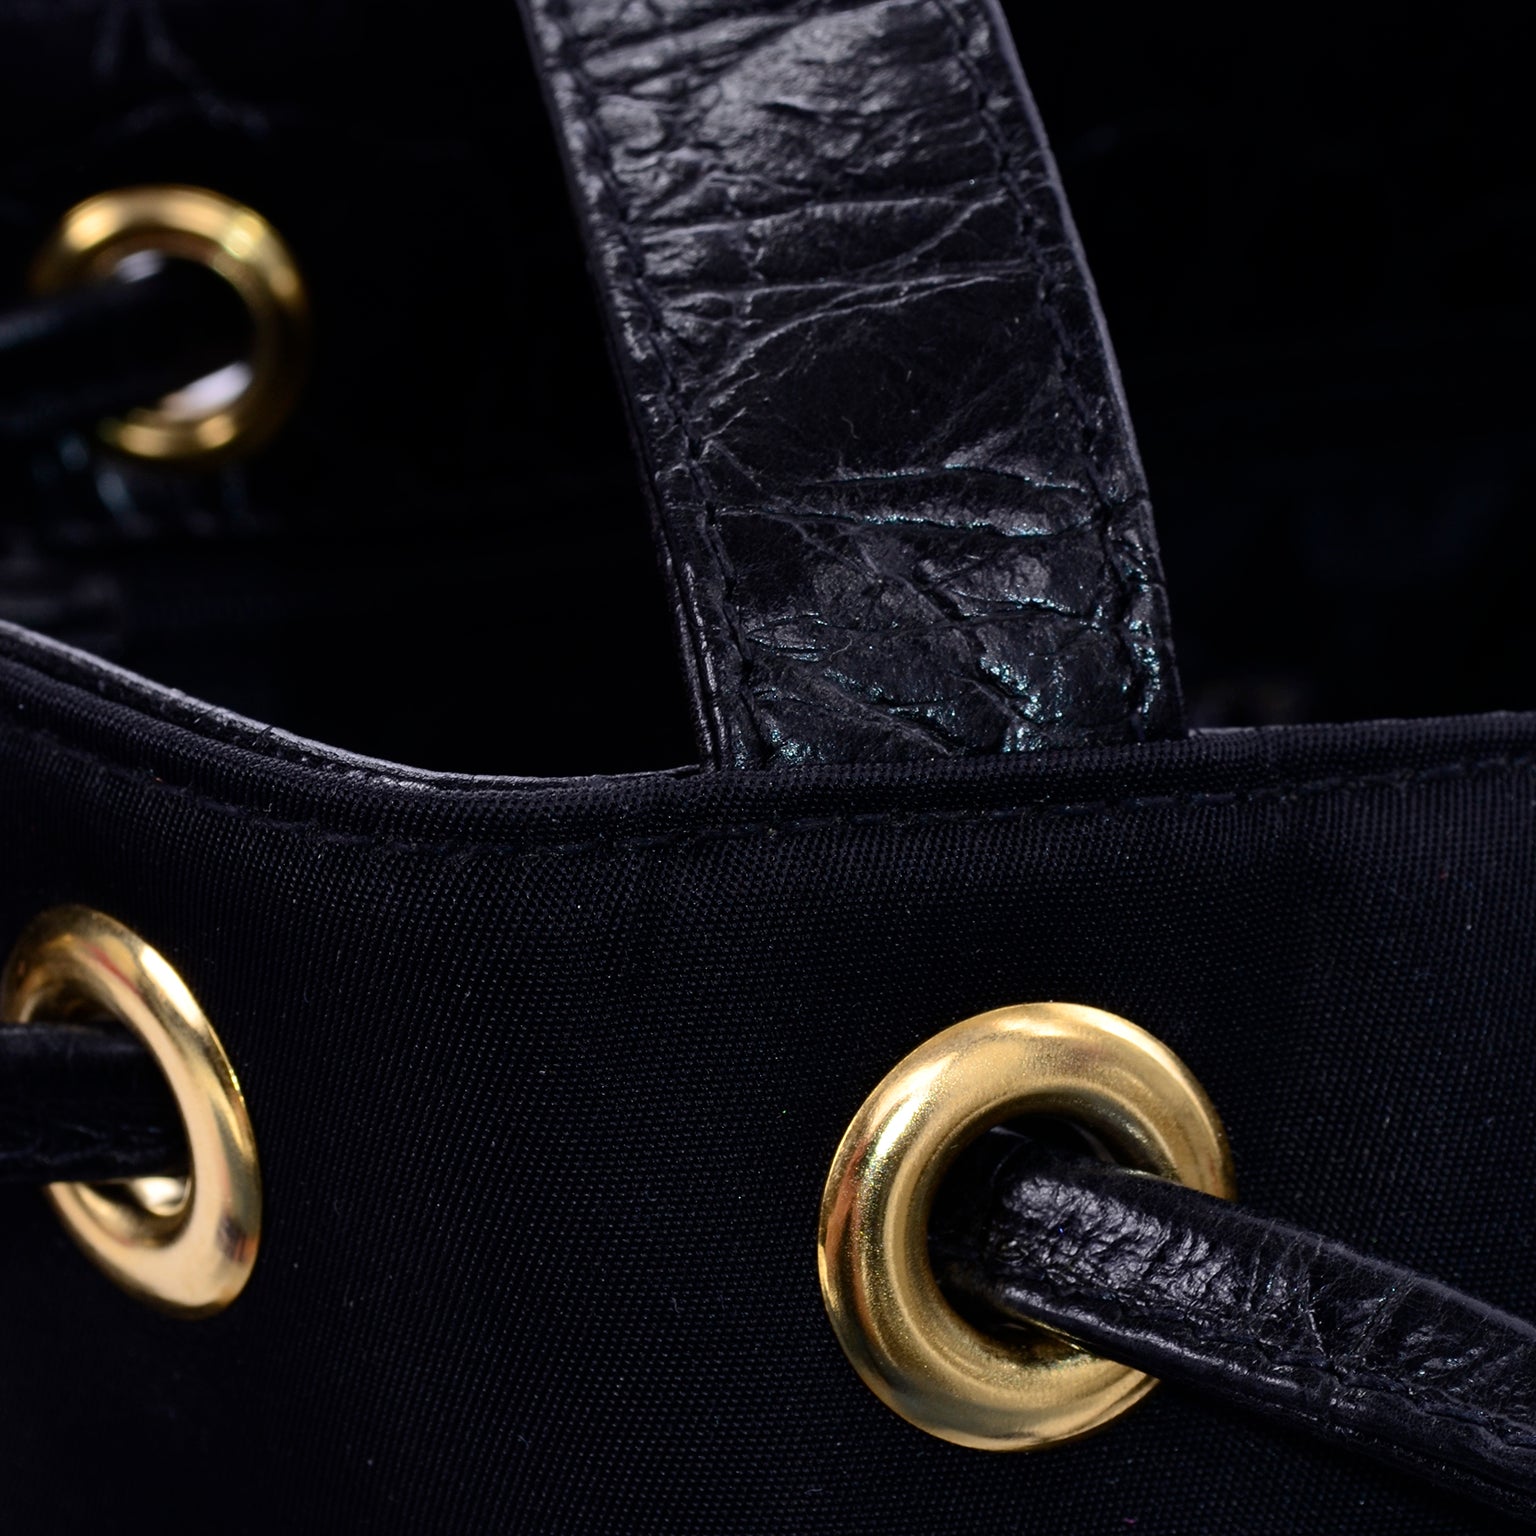 Gianni Versace Leather Vintage Bag